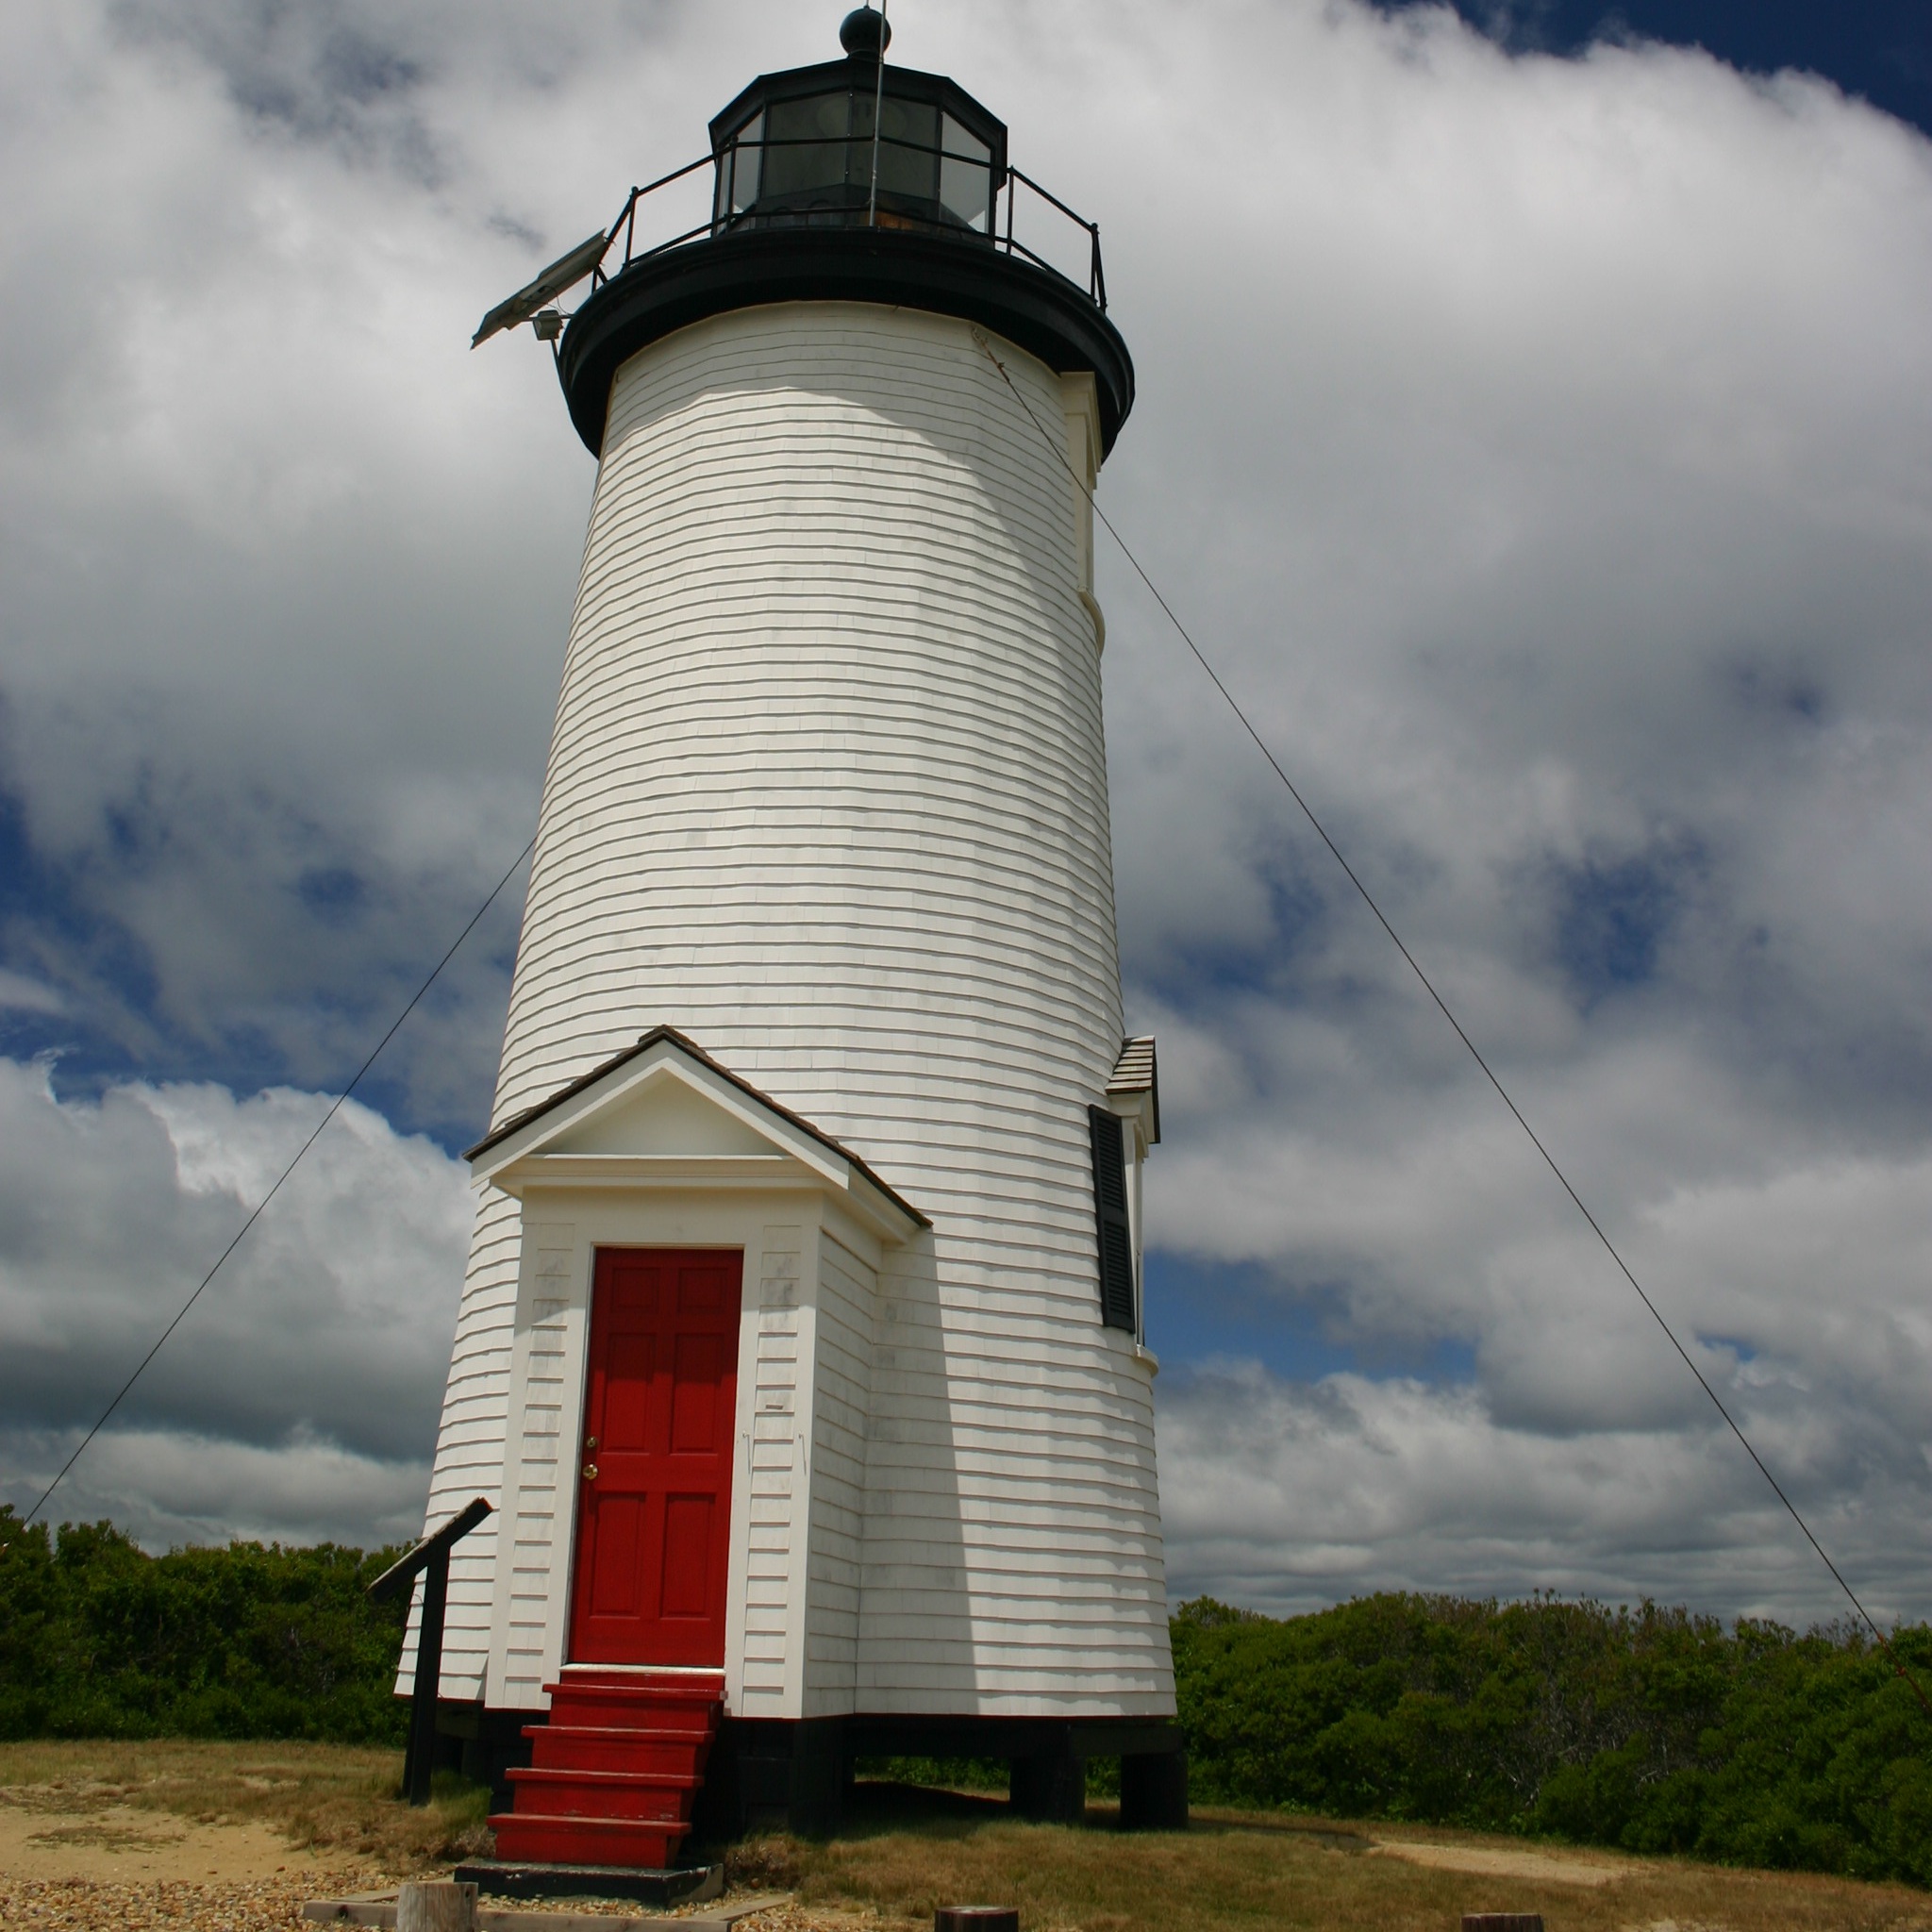 Cape Poge Lighthouse